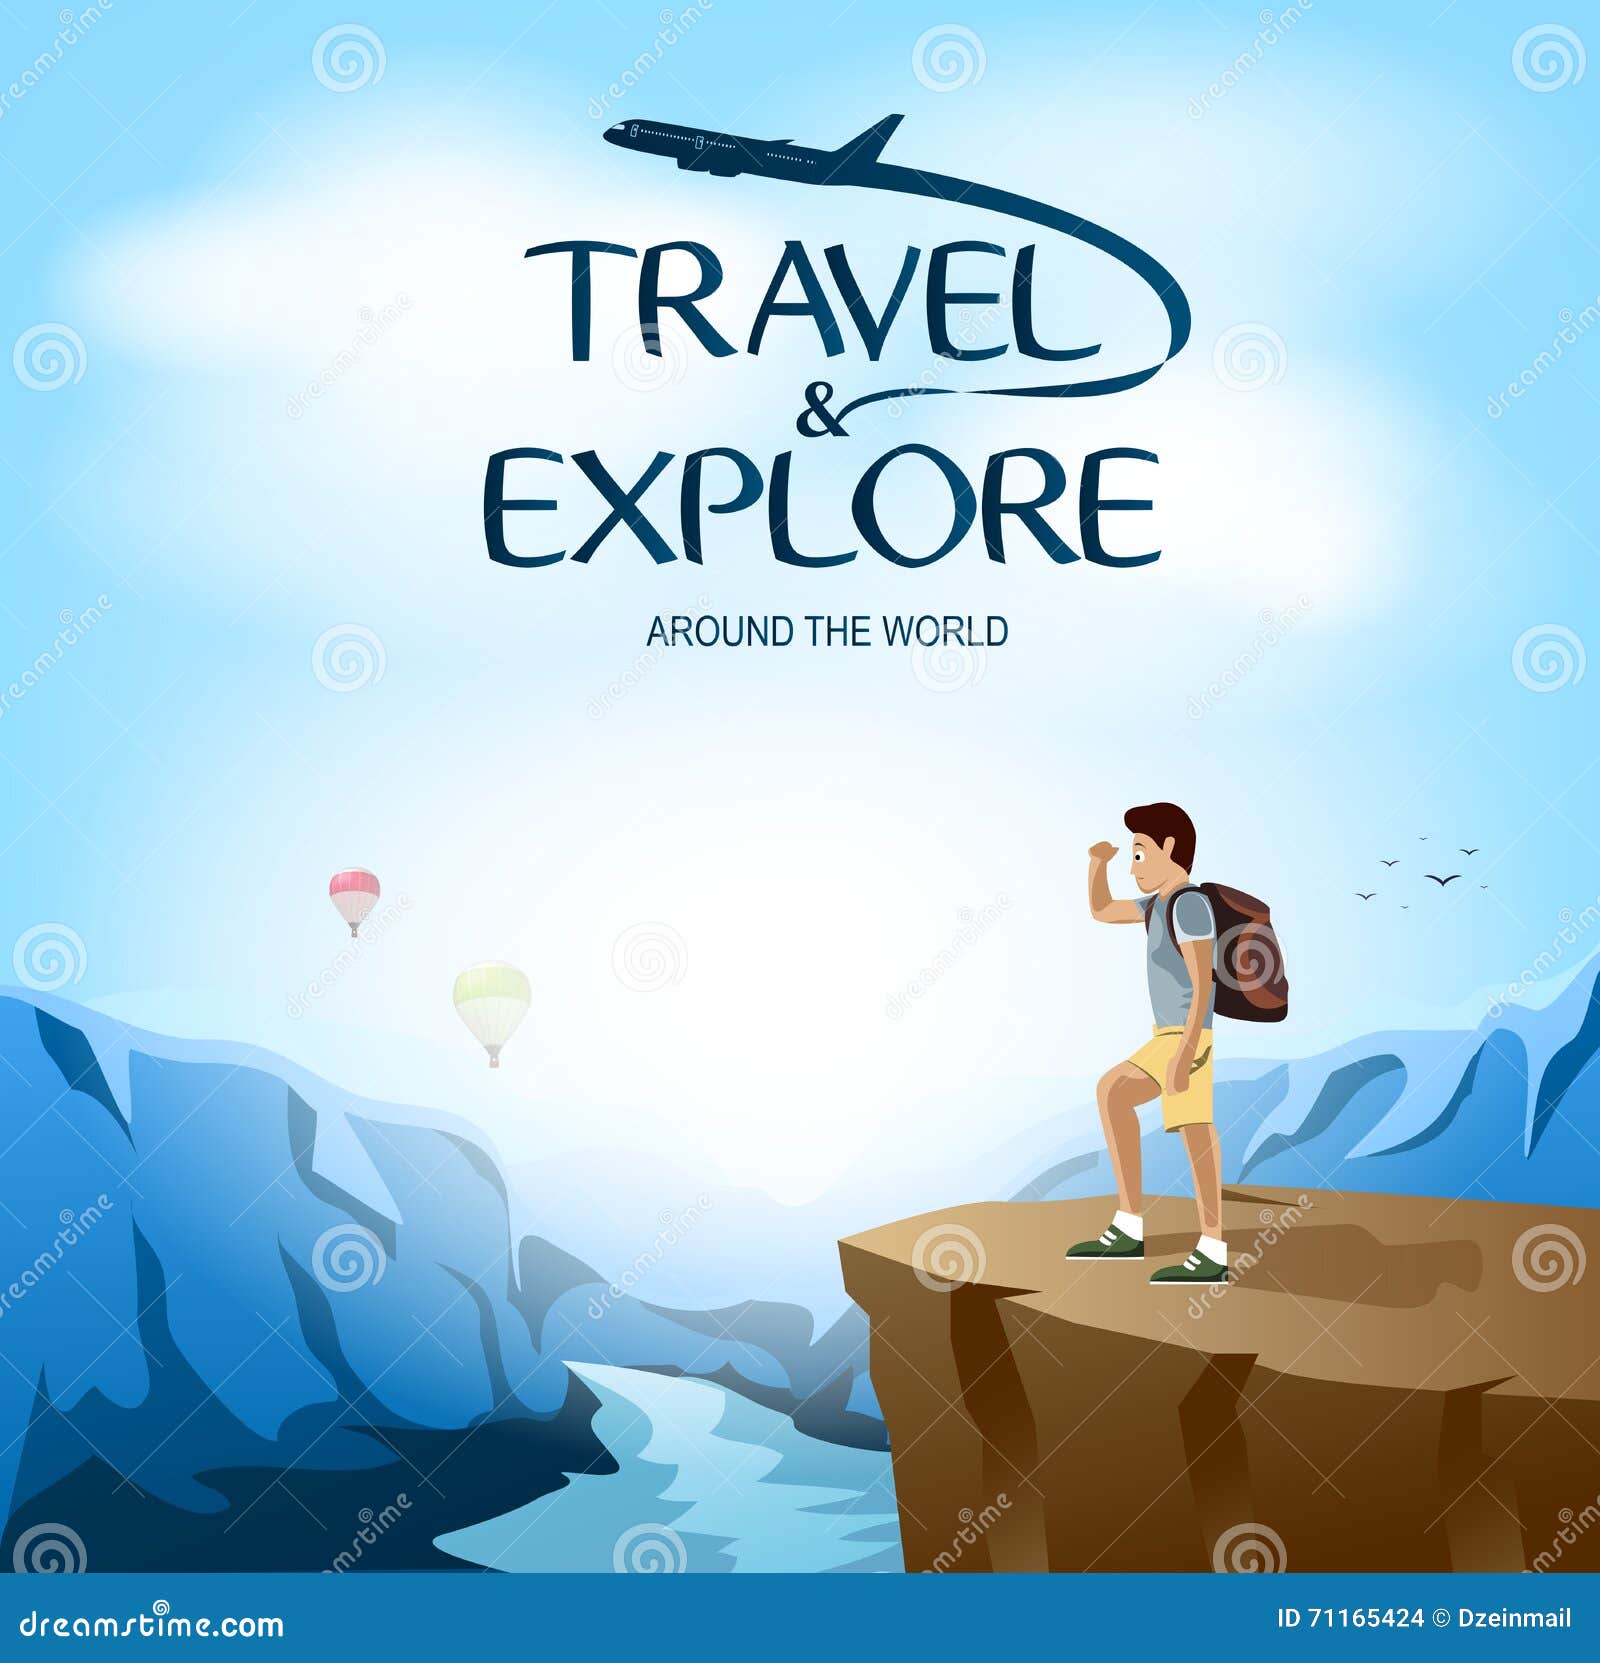 explore everywhere travel